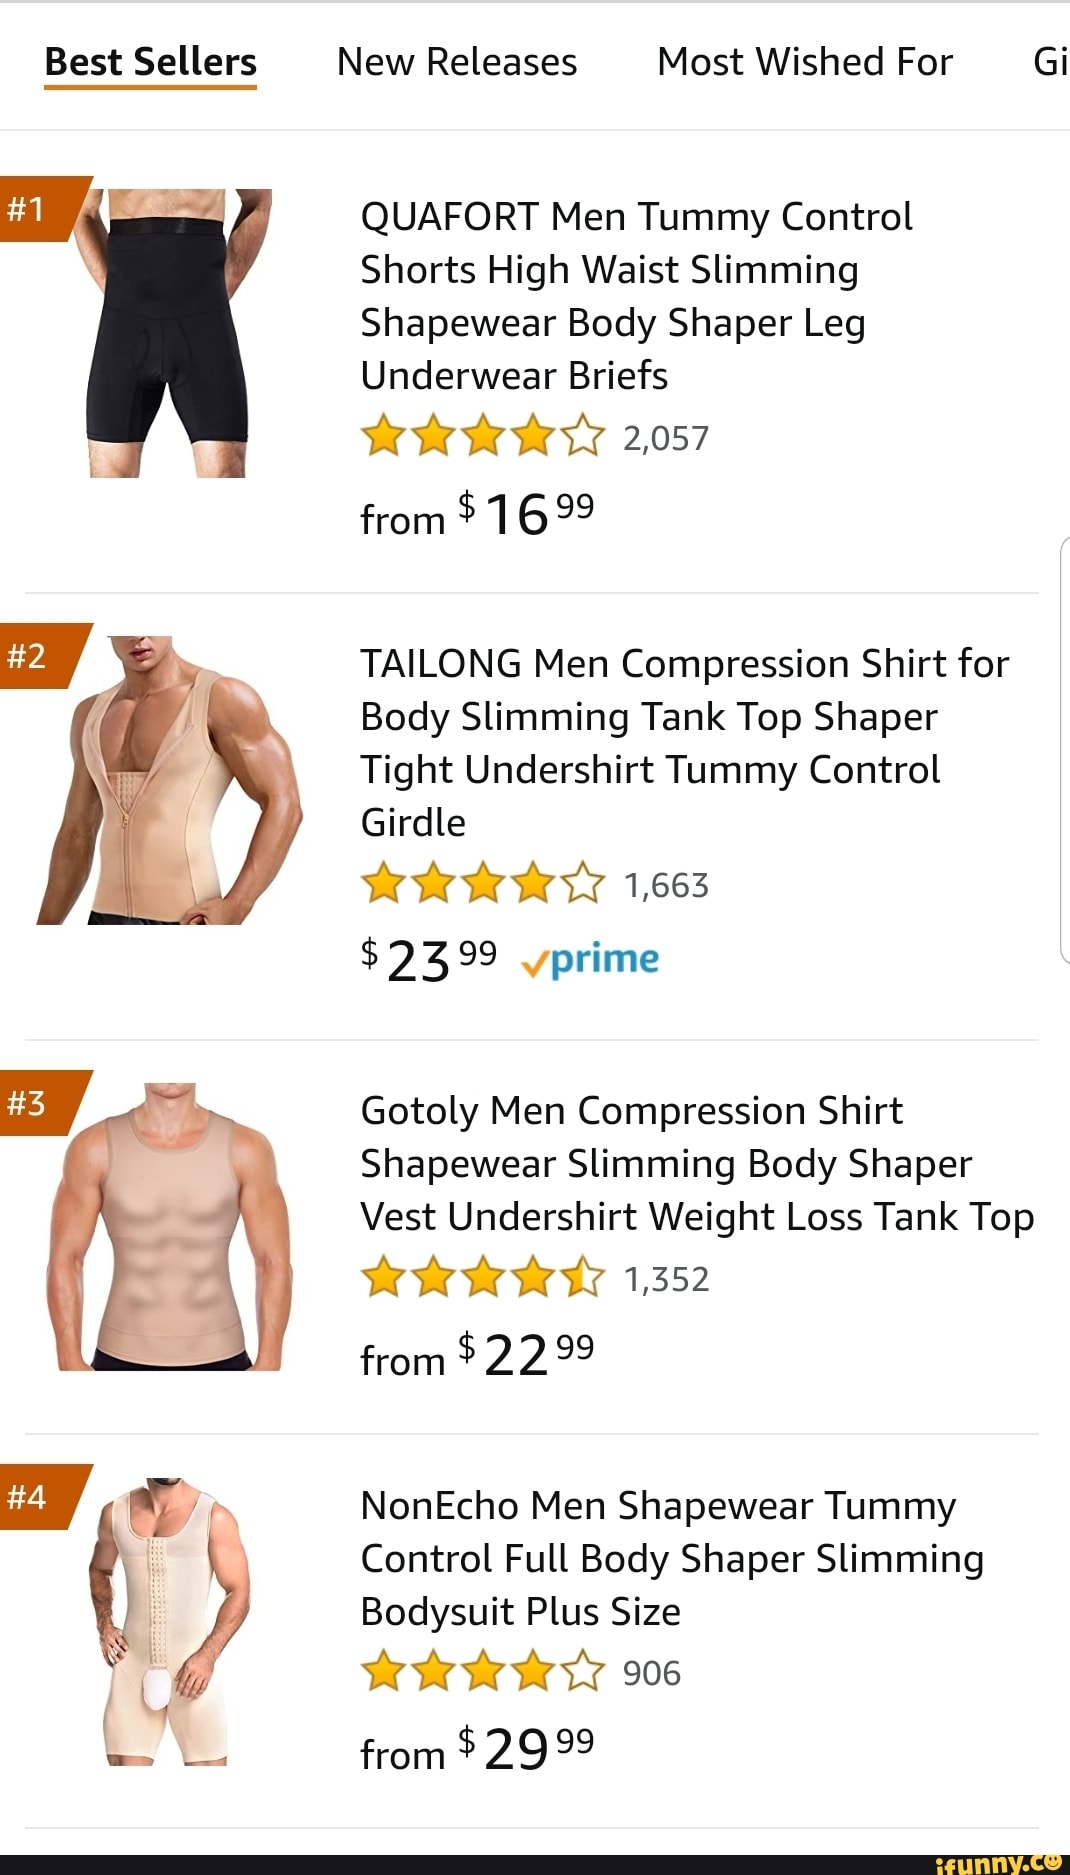  Gotoly Men Compression Shirt Shapewear Slimming